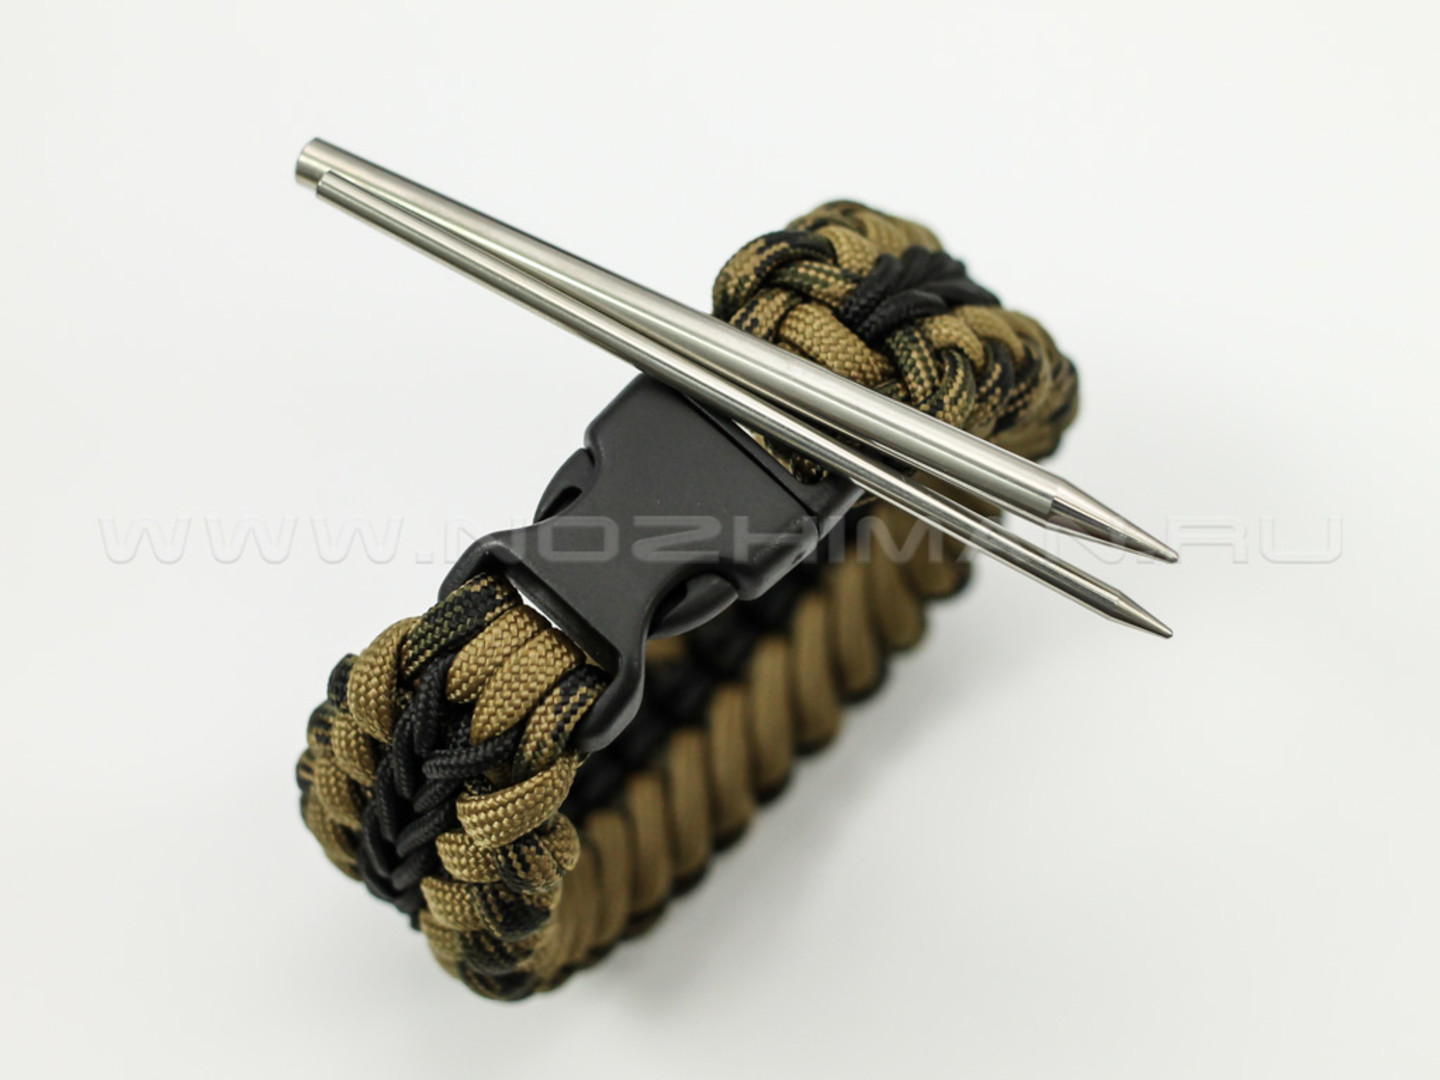 Плетение из Паракорда - Оплетка рукояти ножа №1 - wrap a knife handle with paracord using